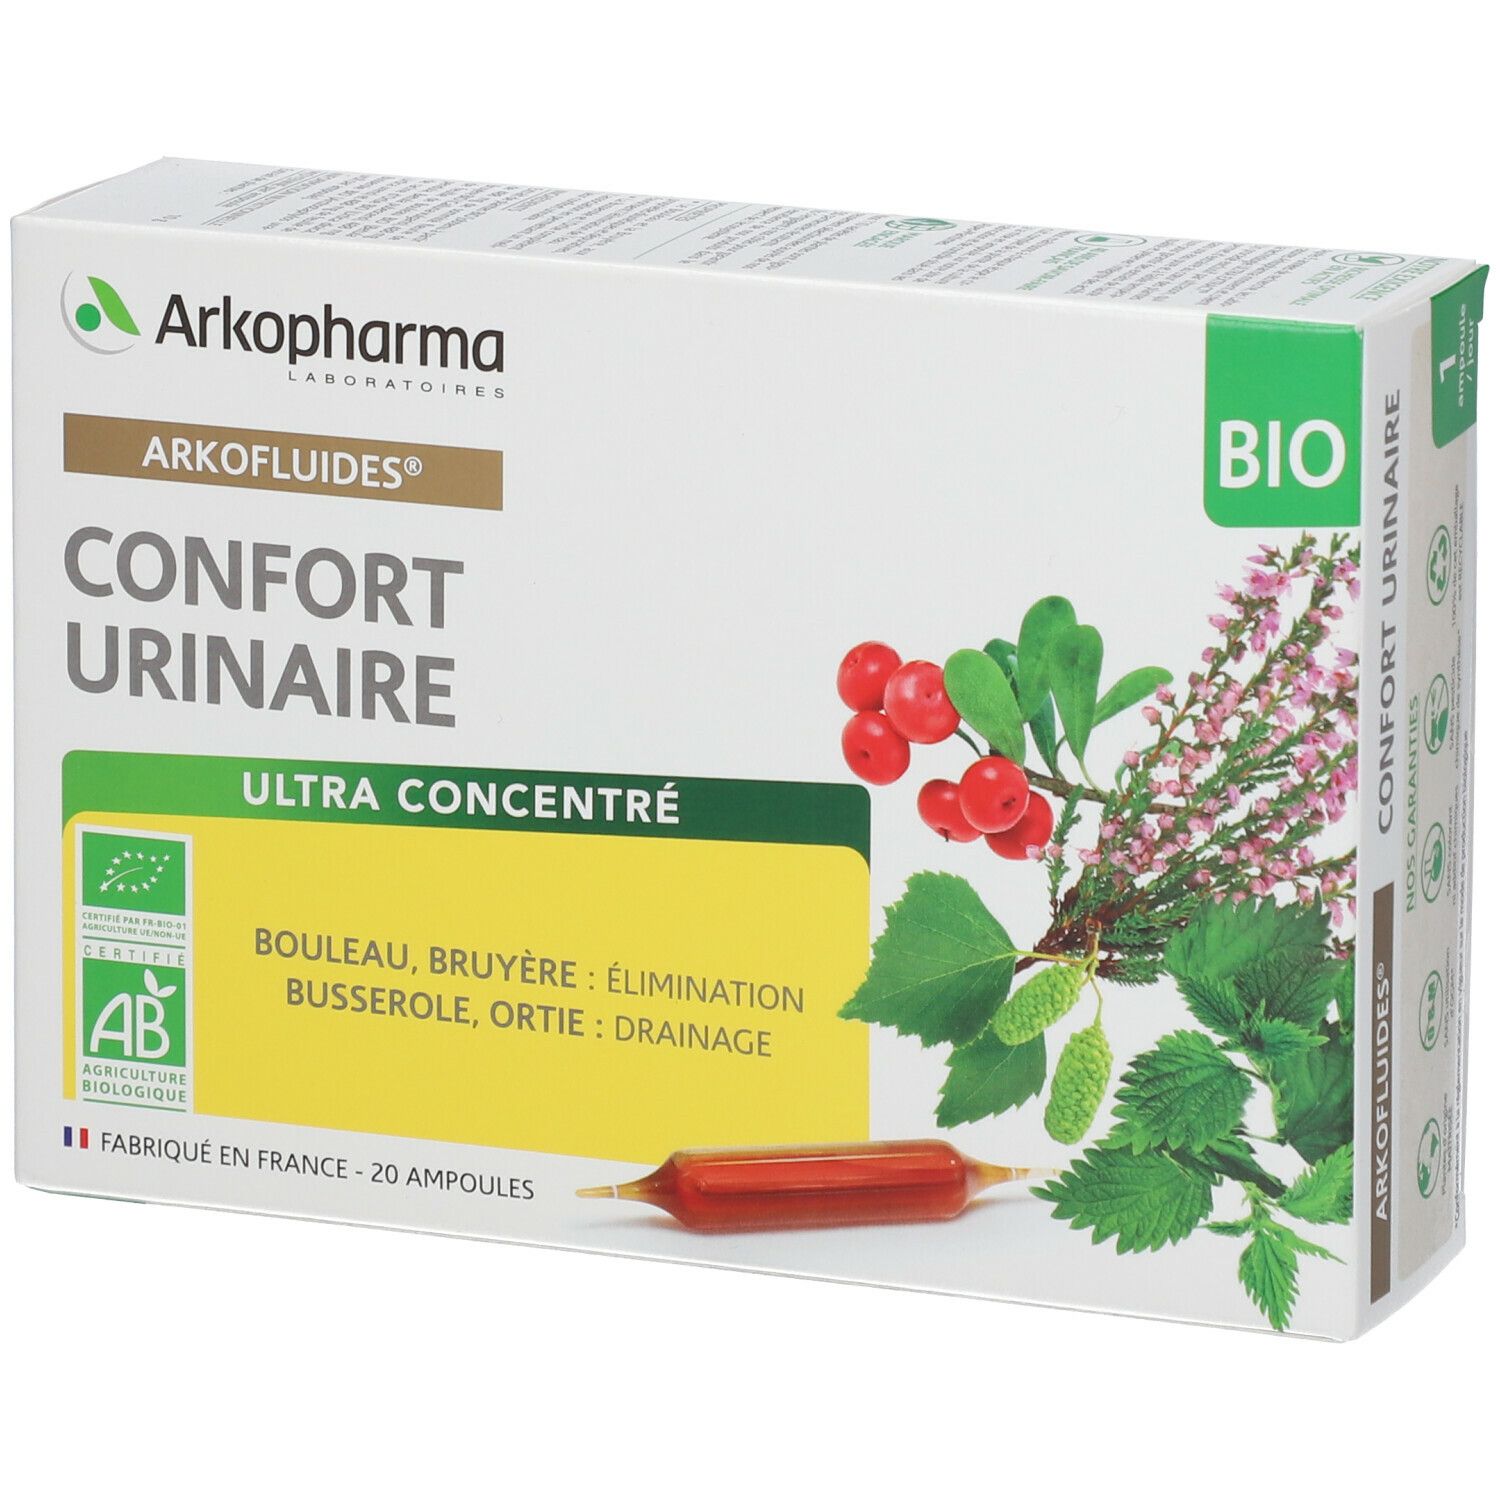 Image of Arkopharma ARKOFLUIDES® Urinary Comfort Bio